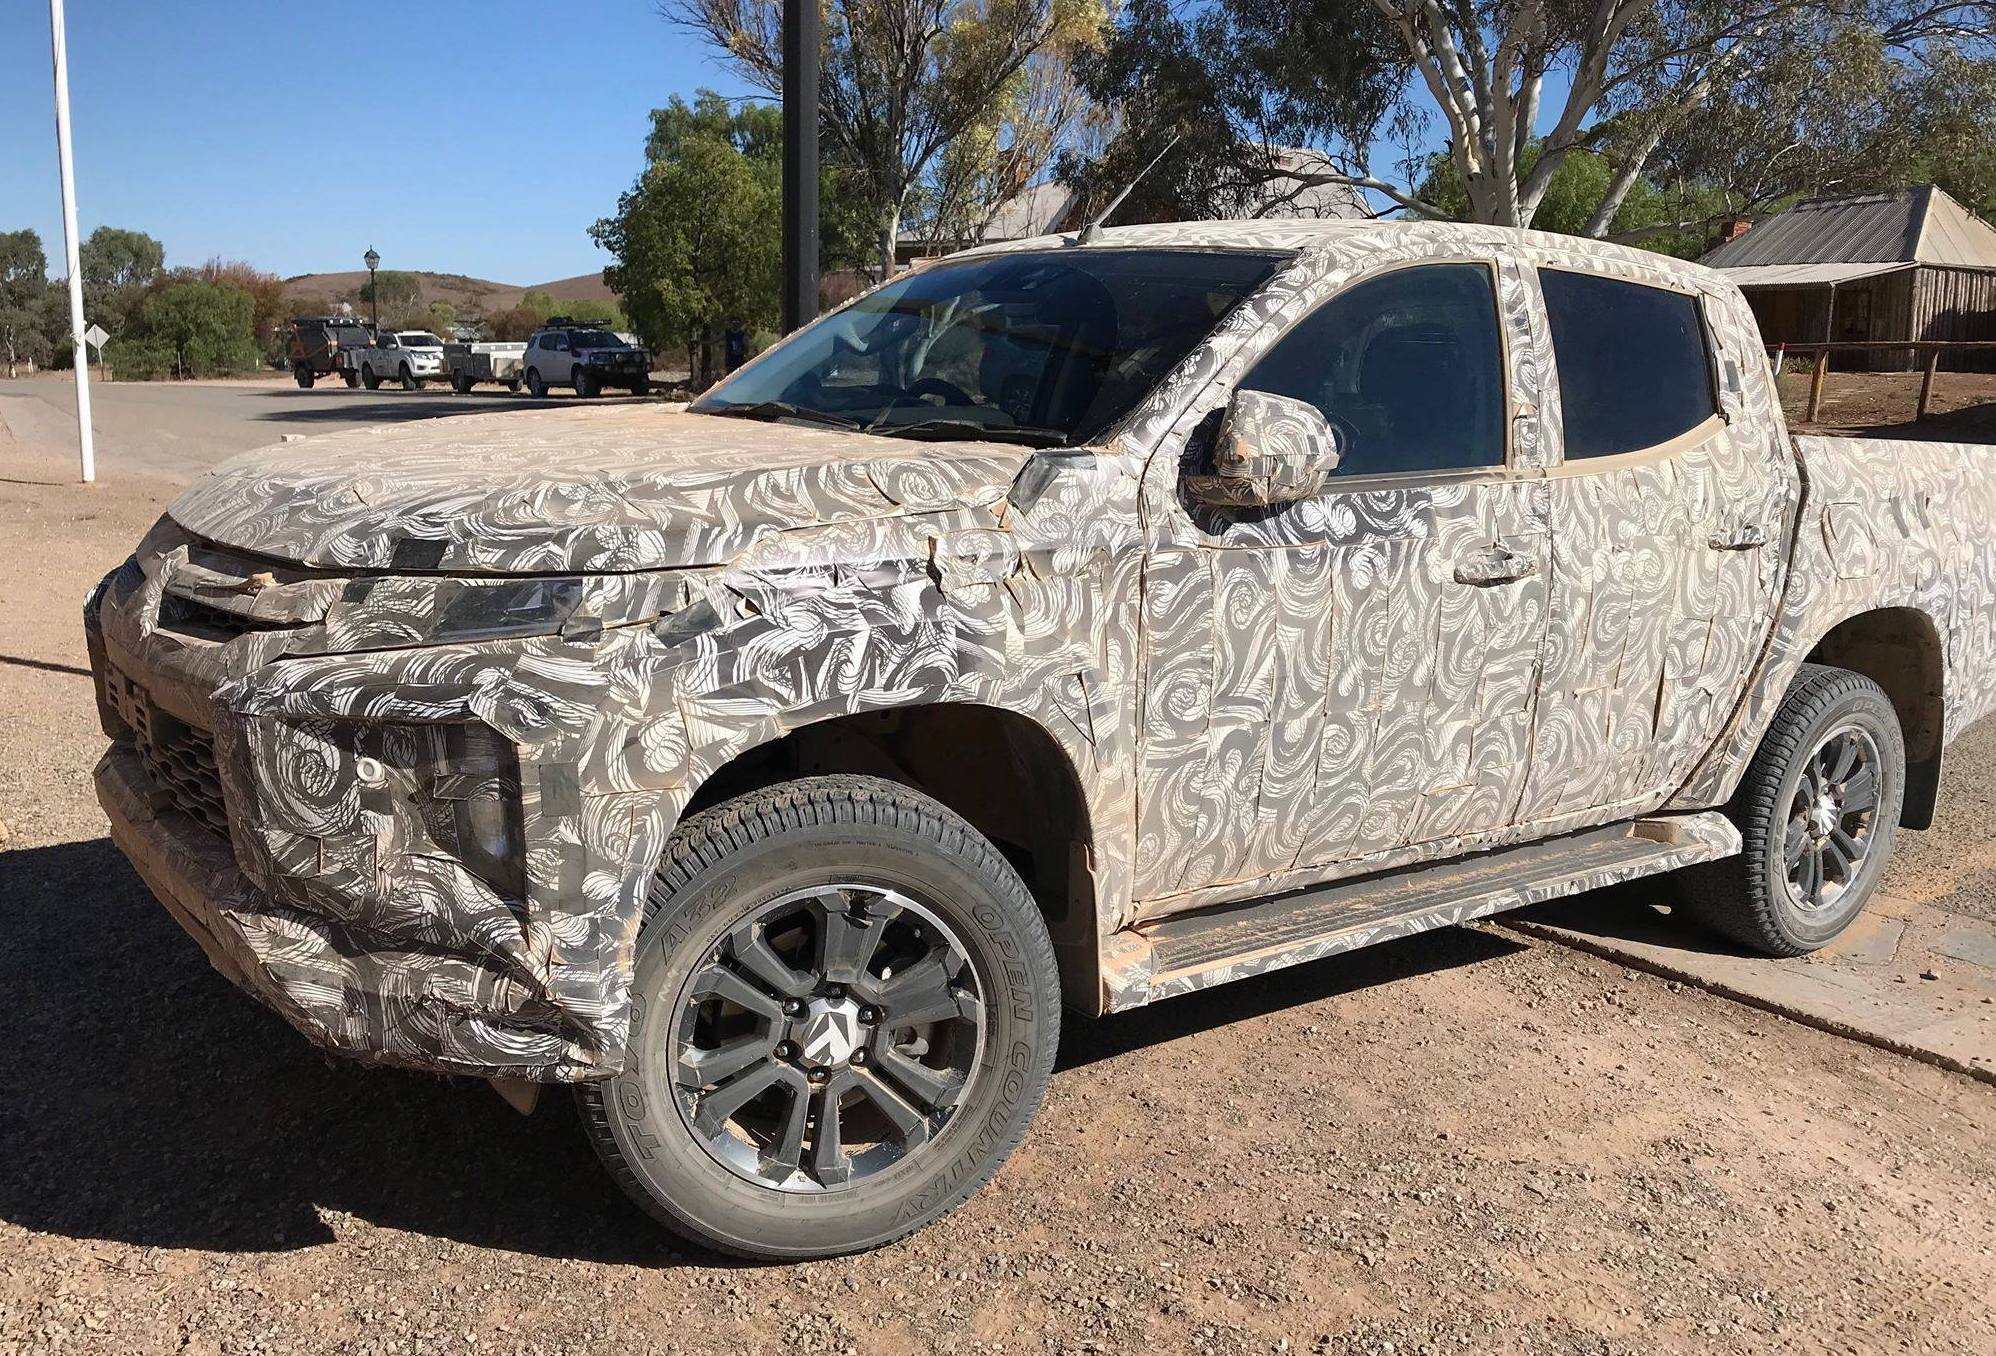 2019 Mitsubishi Triton prototype spotted in South Australia